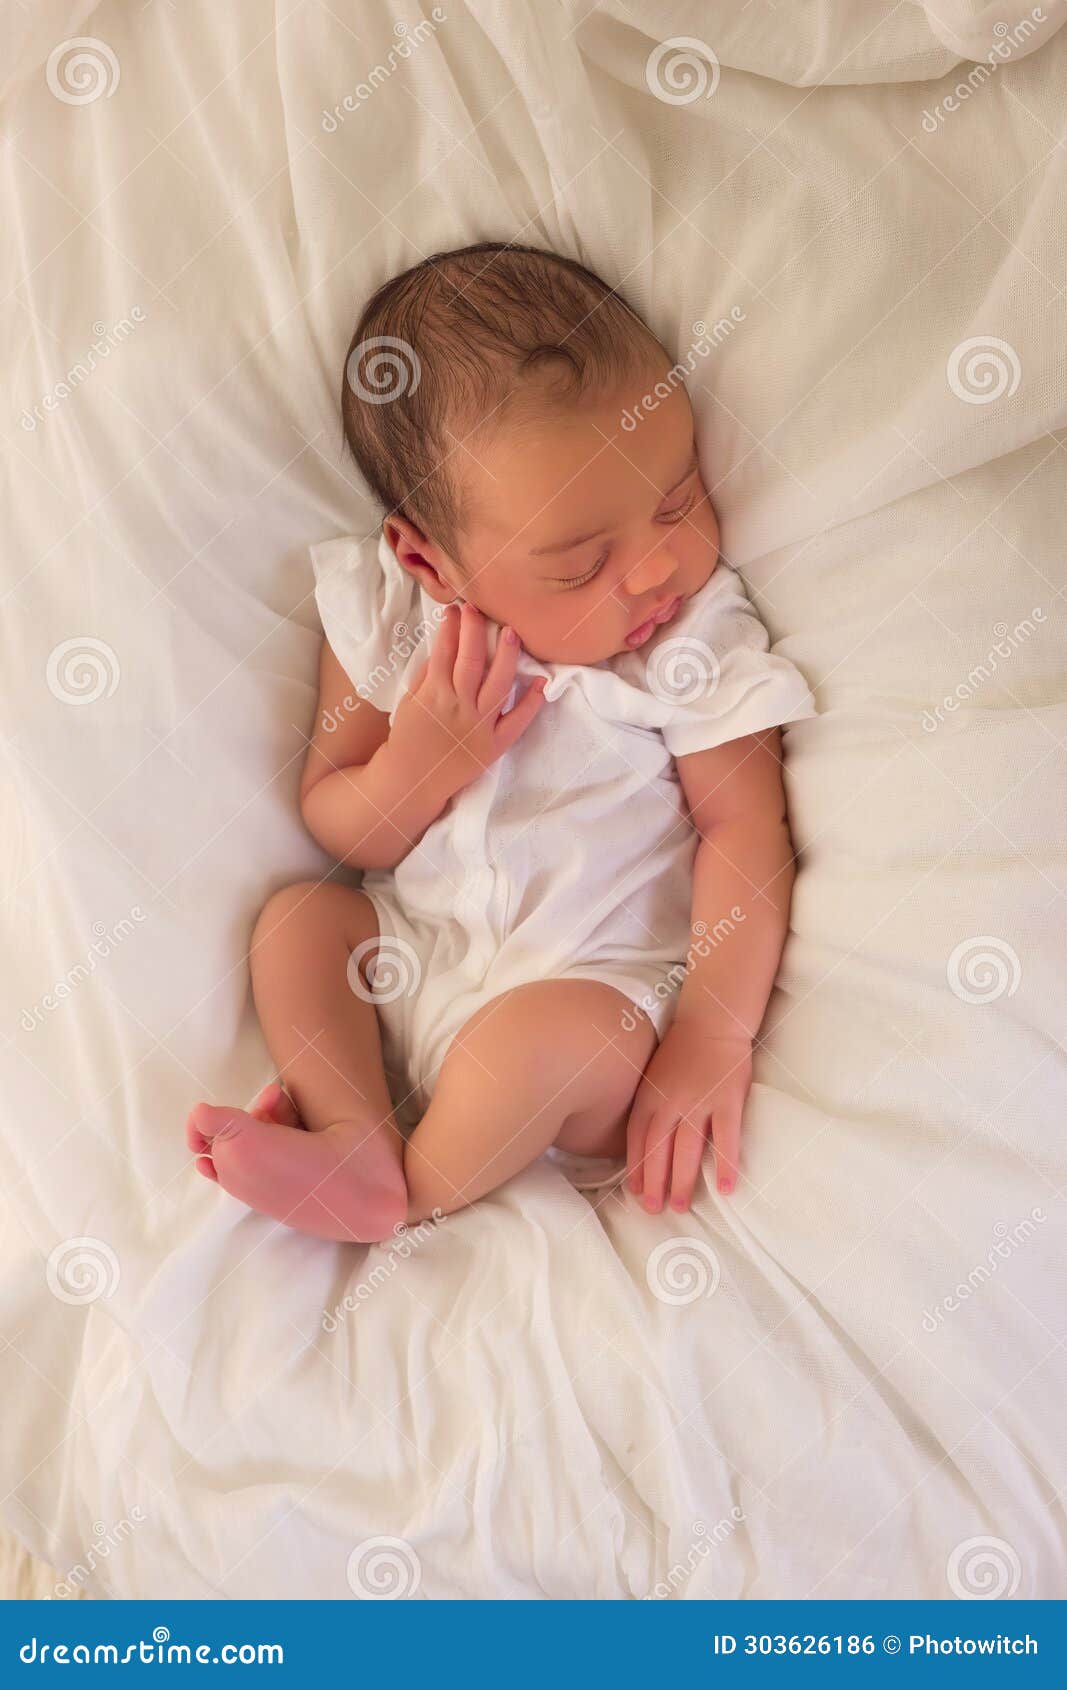 african newborn baby in white romper